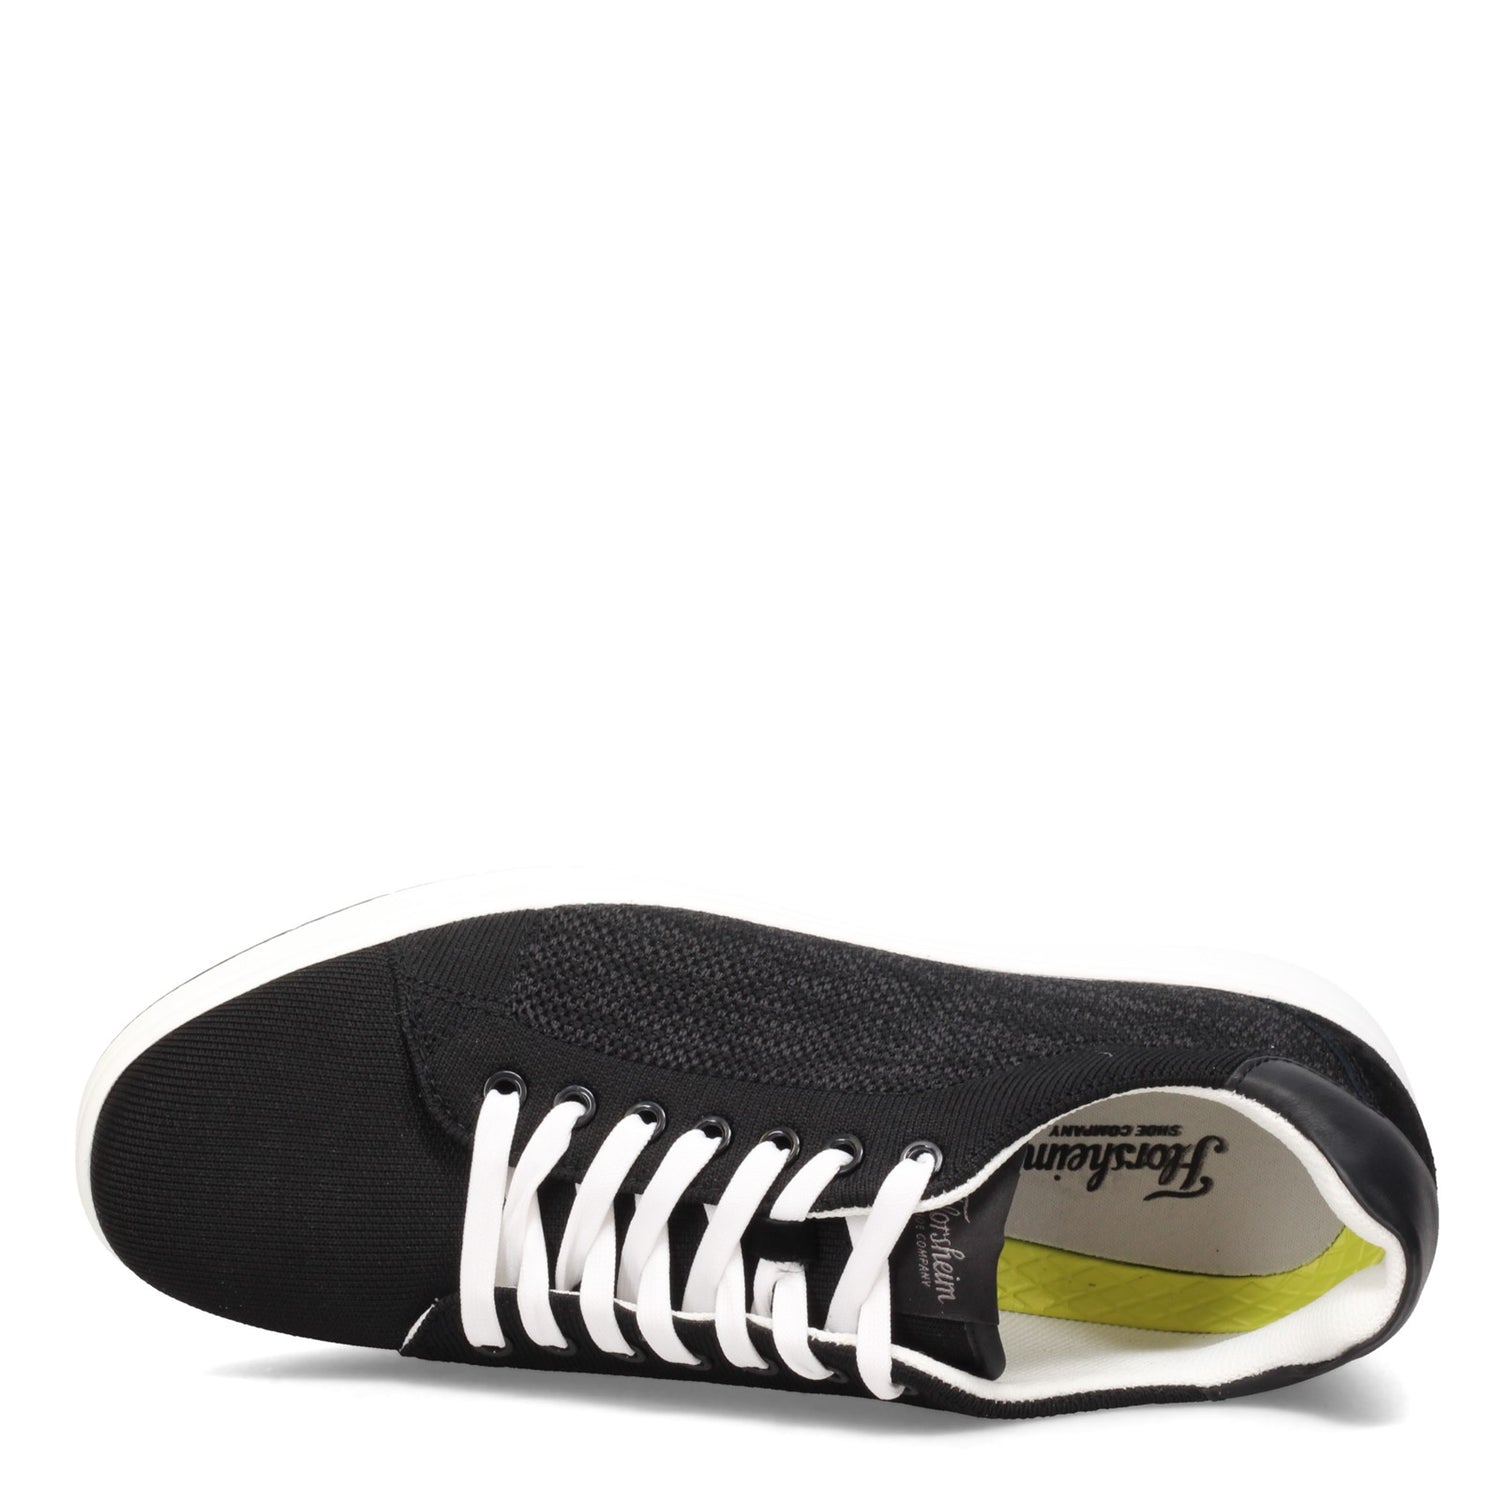 Peltz Shoes  Men's Florsheim Heist Knit Lace To Toe Sneaker BLACK 14354-001